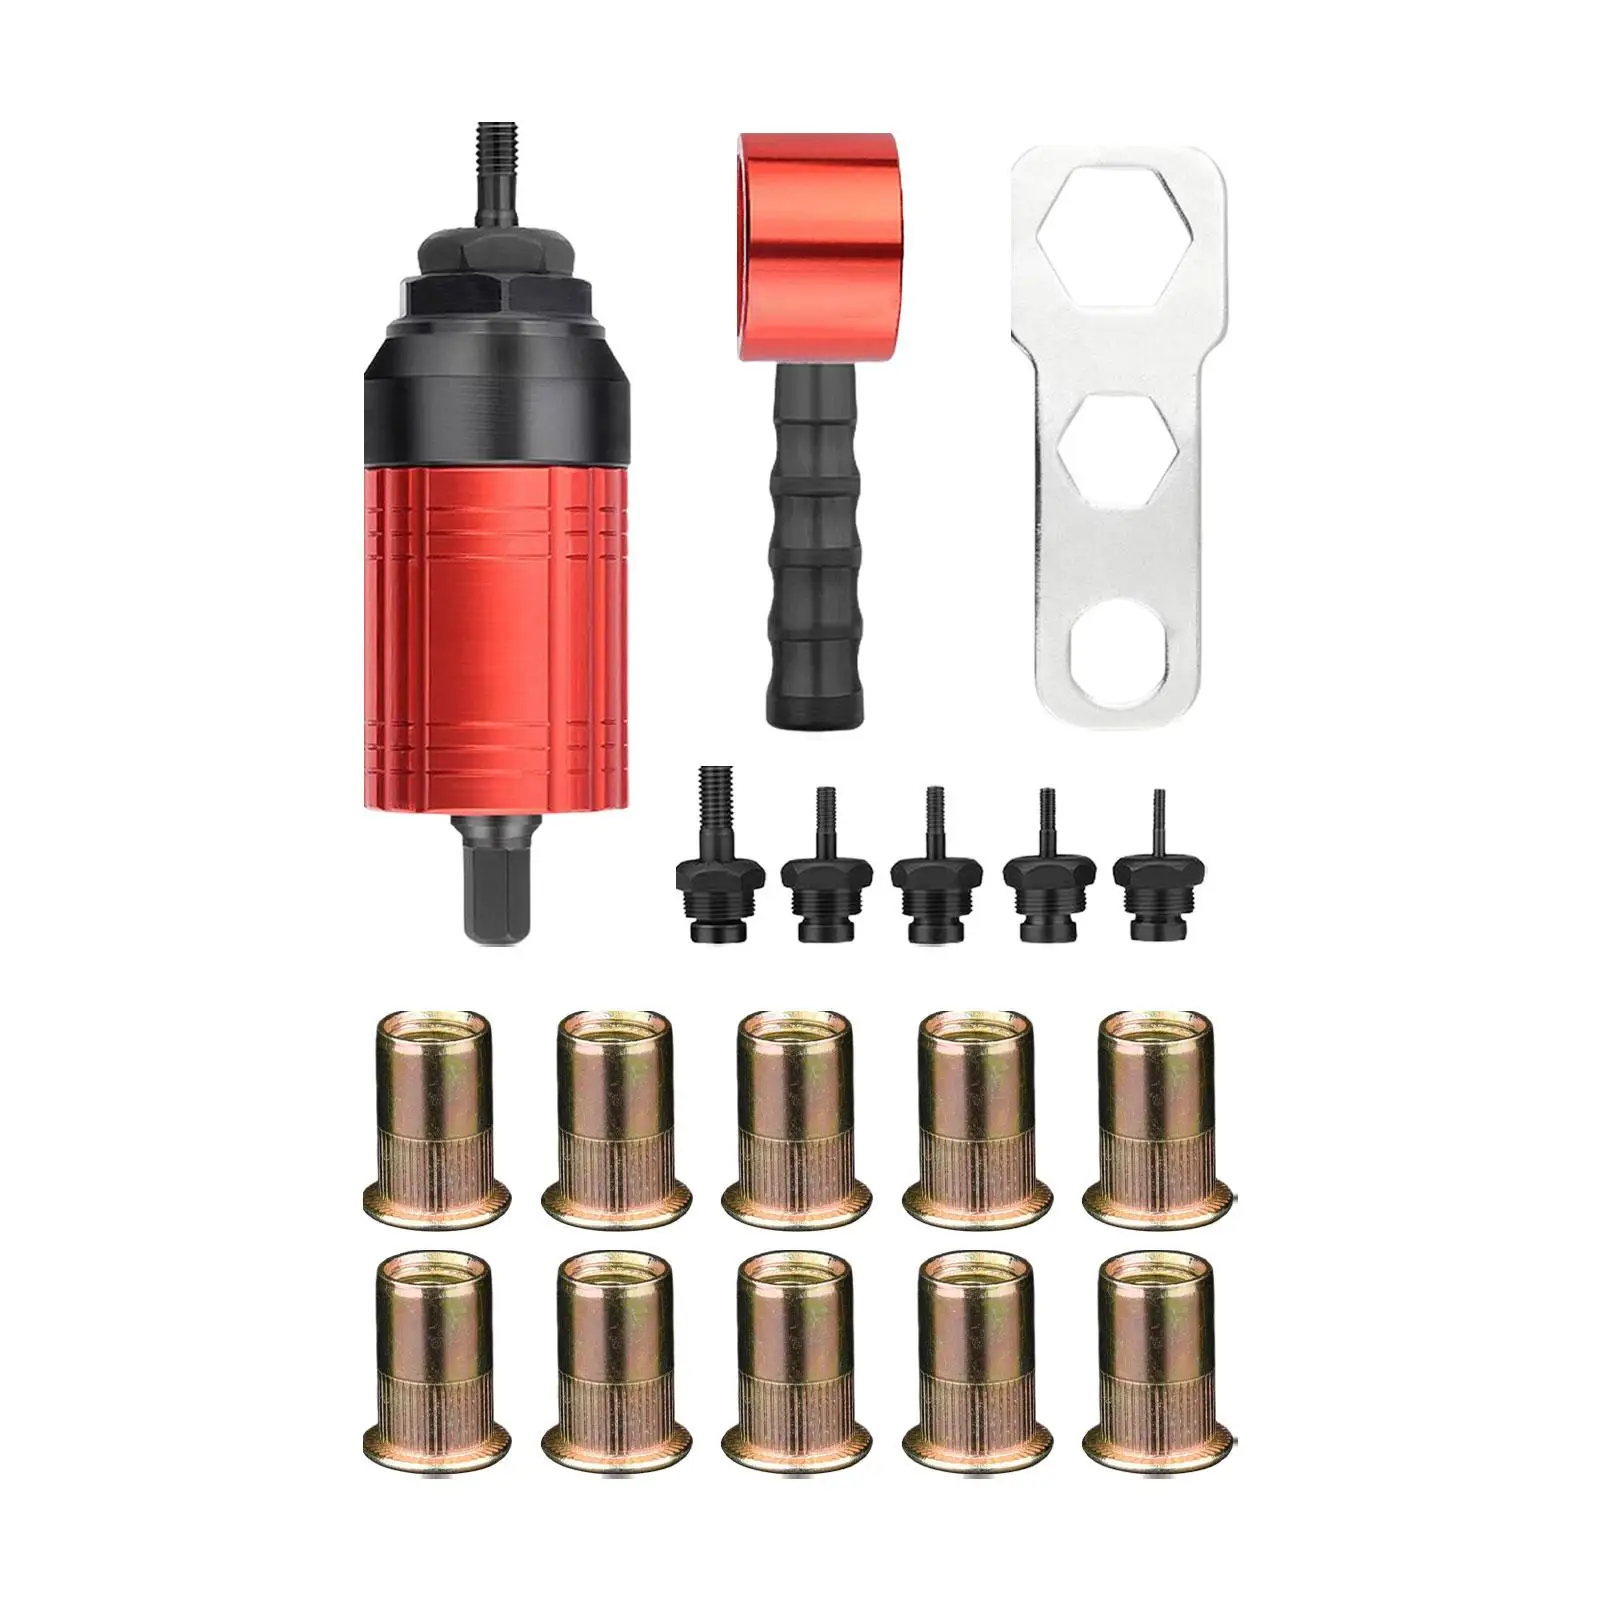 Rivet Nut Drill Adaptor Attachment Riveting Kits with 10 Rivet Nuts Ergonomic Handle Threaded Insert for Ship Repair Furniture